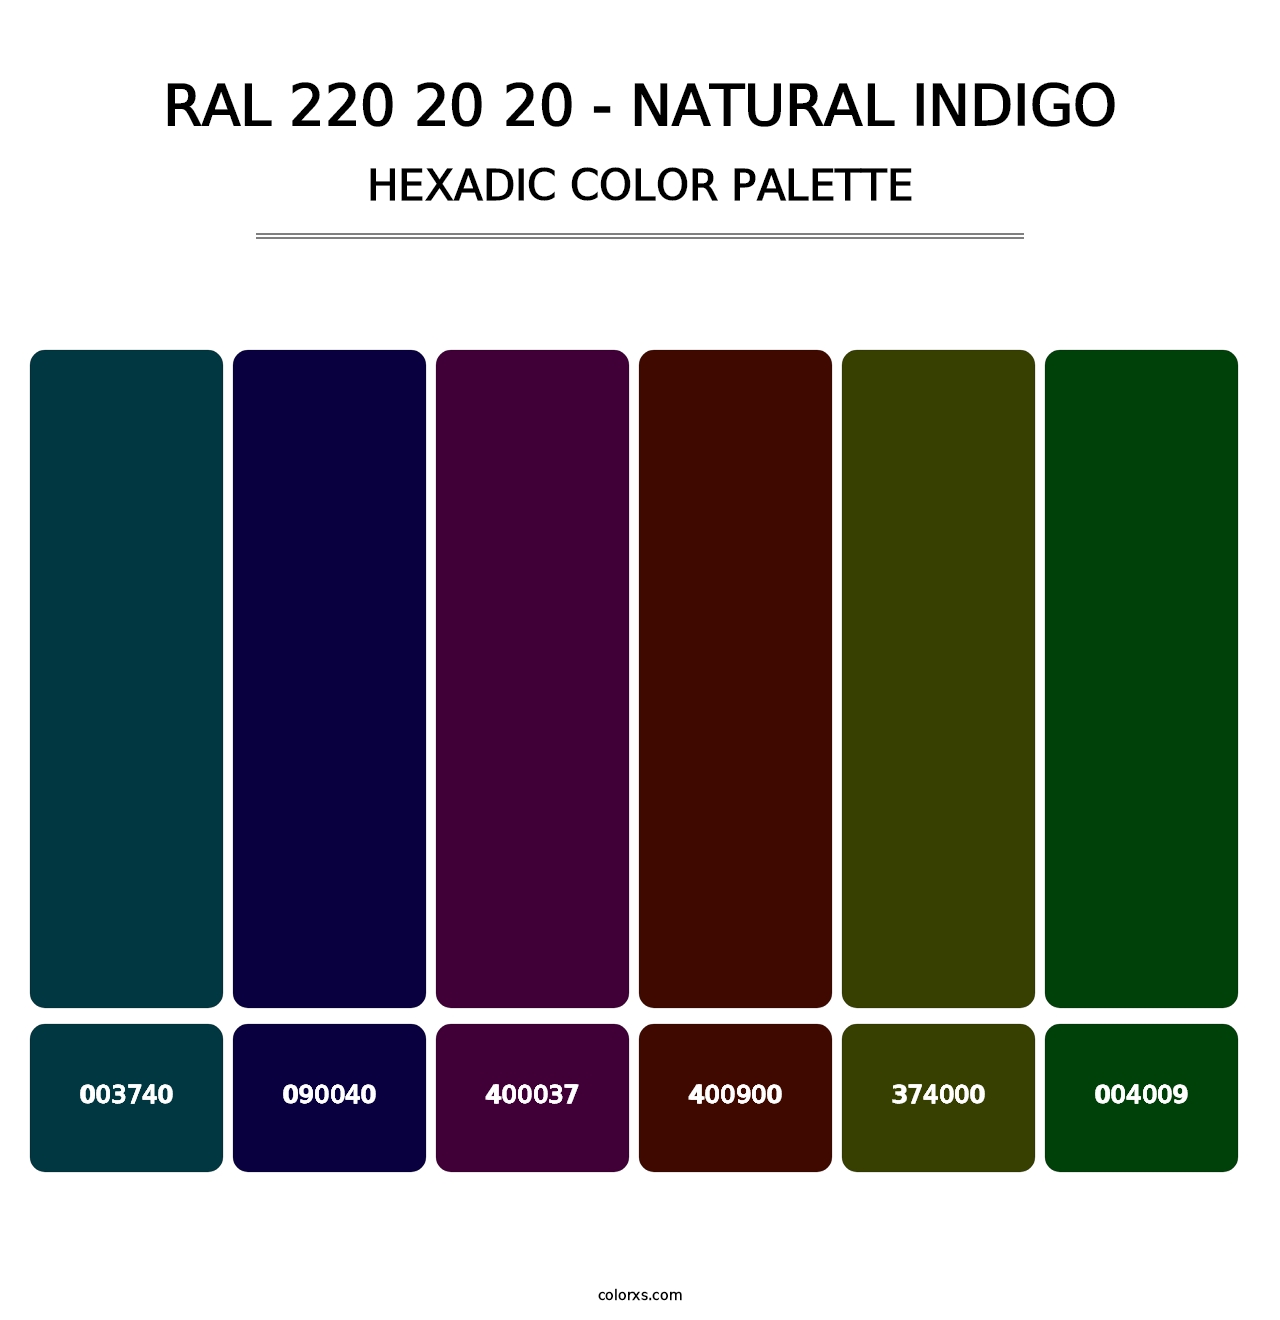 RAL 220 20 20 - Natural Indigo - Hexadic Color Palette